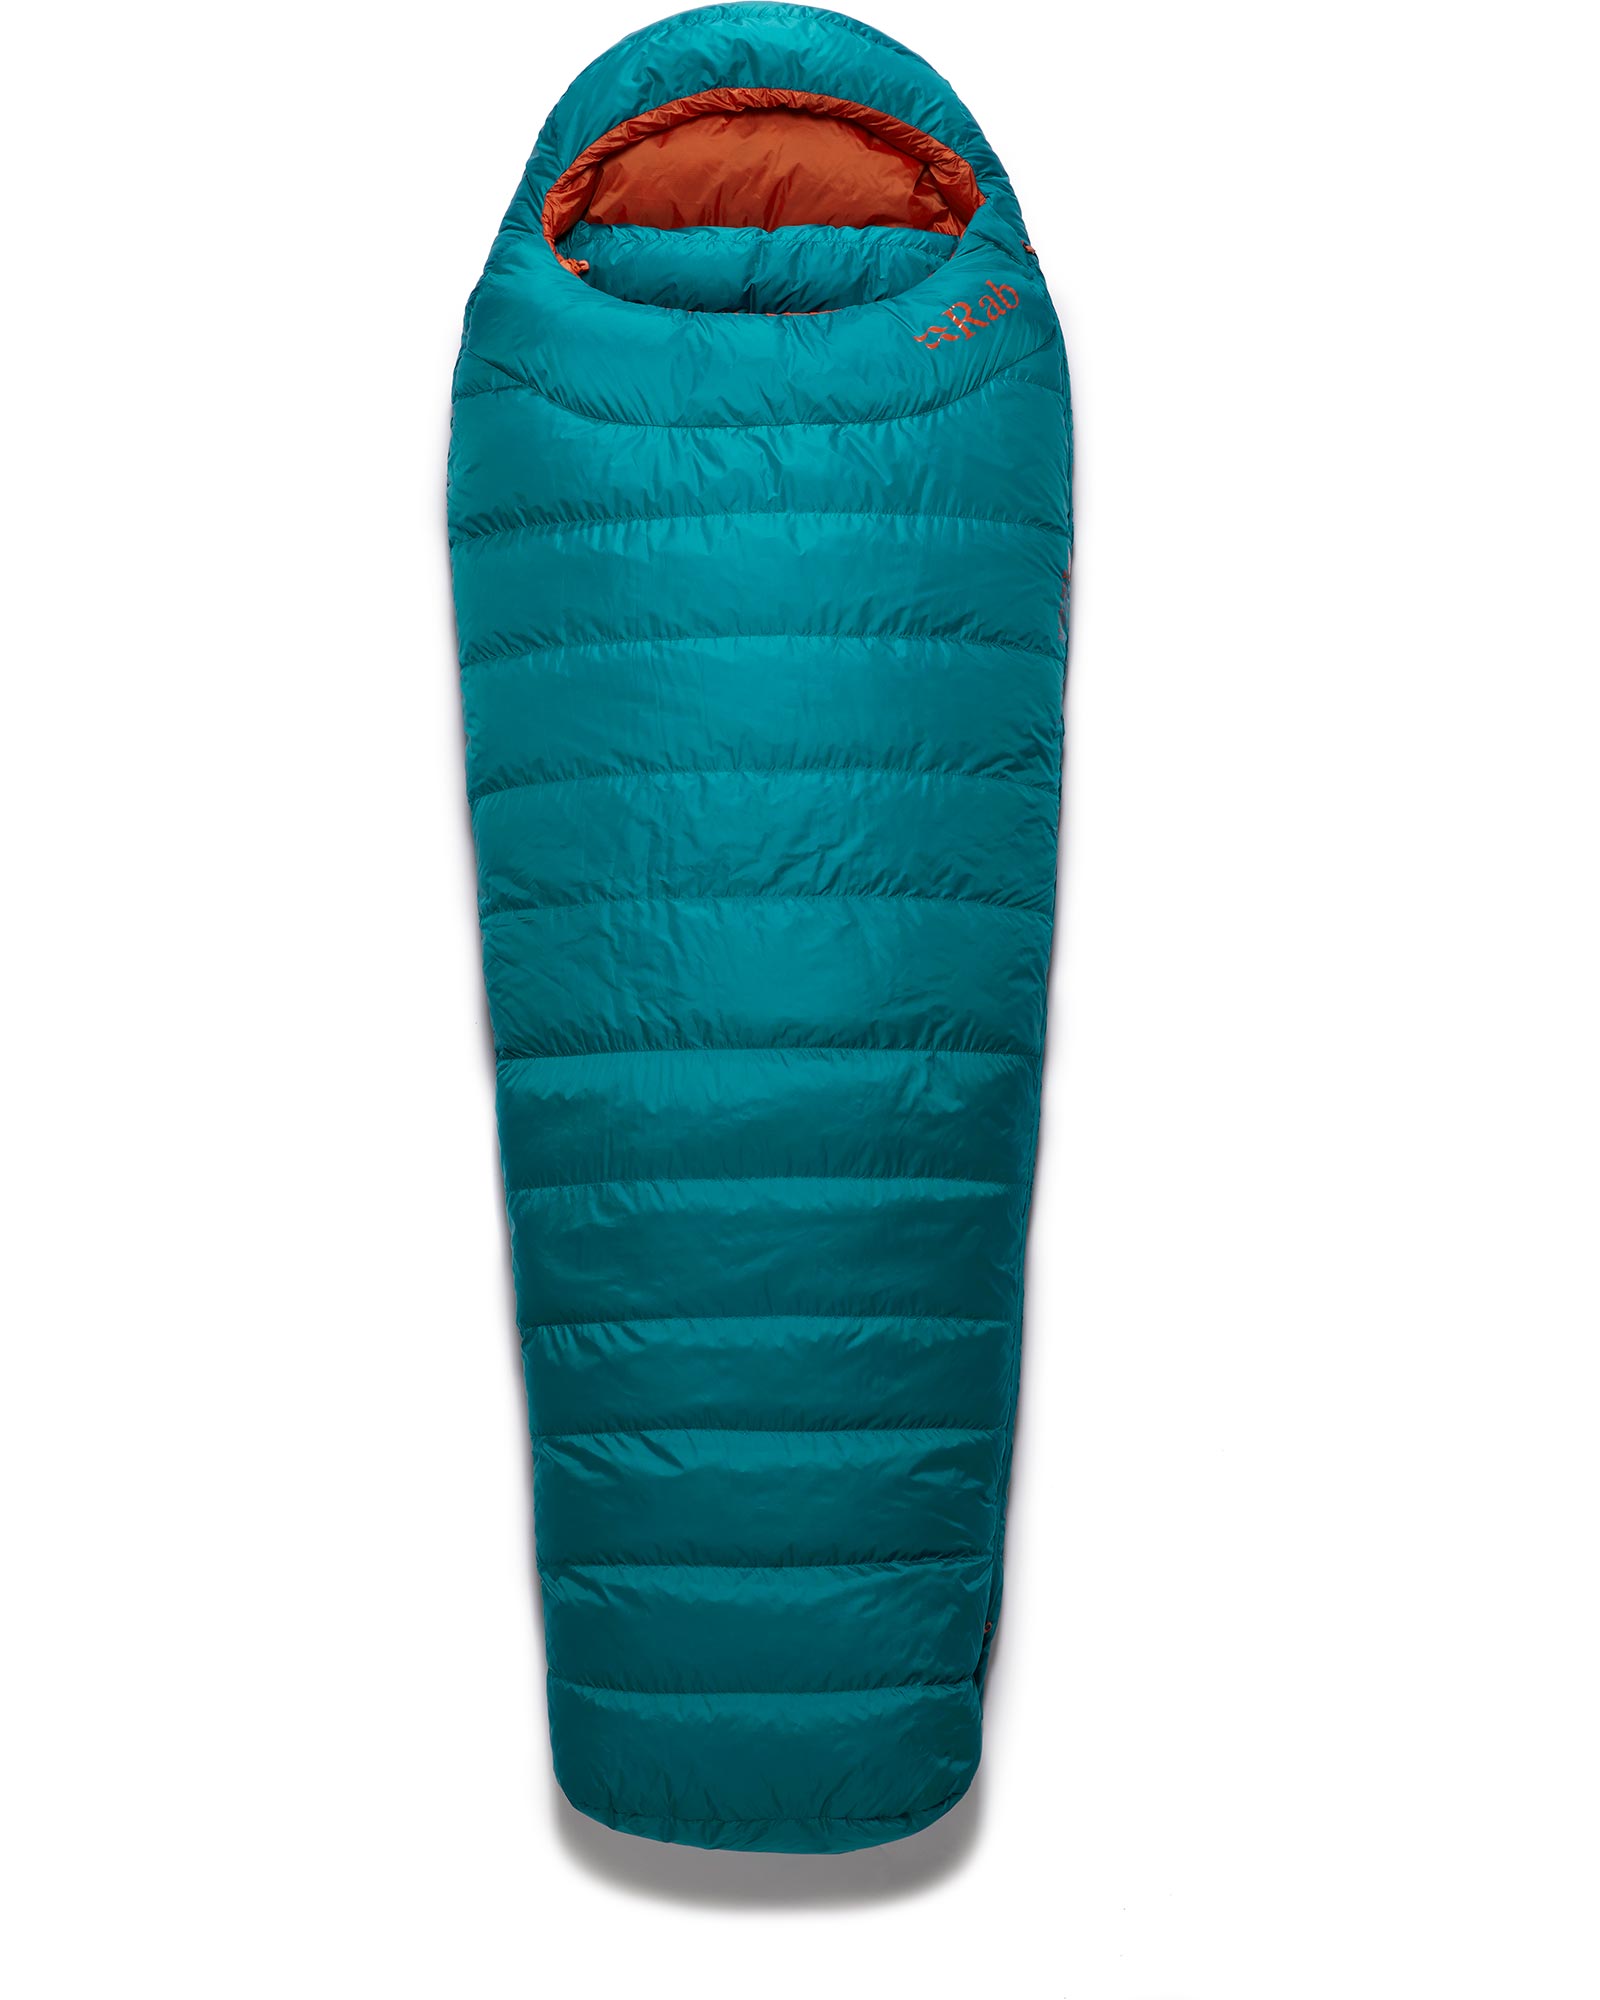 Rab Ascent 500 Women’s Sleeping Bag - Marina Blue Left Zip